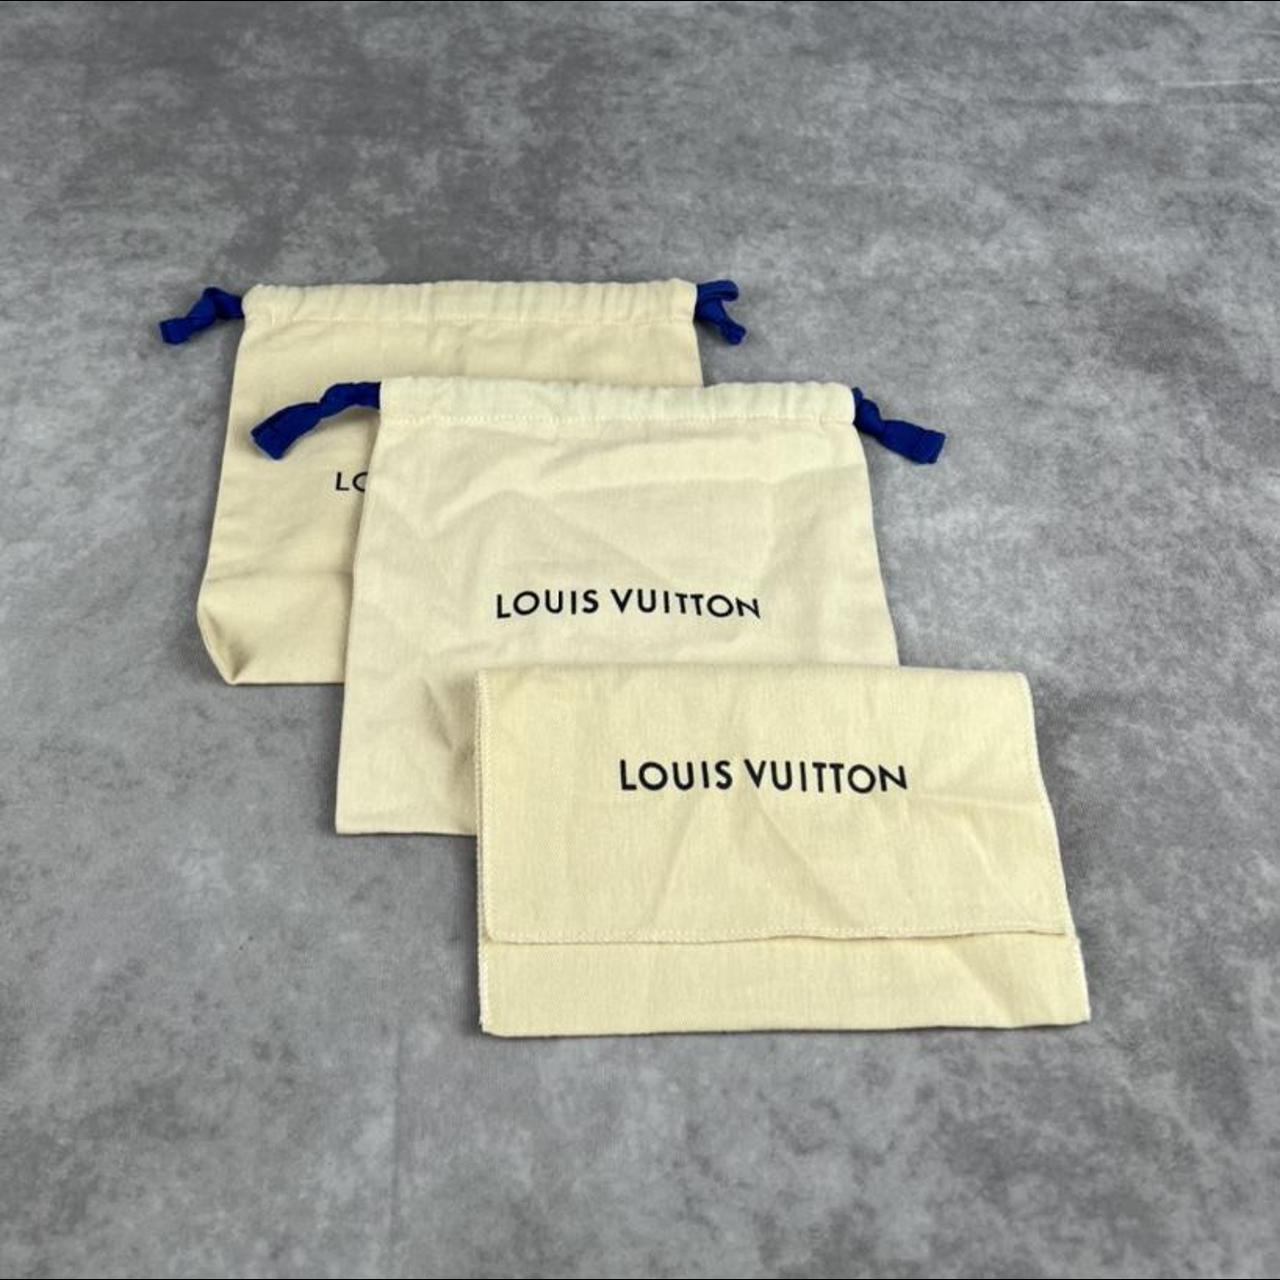 Louis Vuitton XL Dustbag 23 x 18 x 6 “ Fits GM or similar size